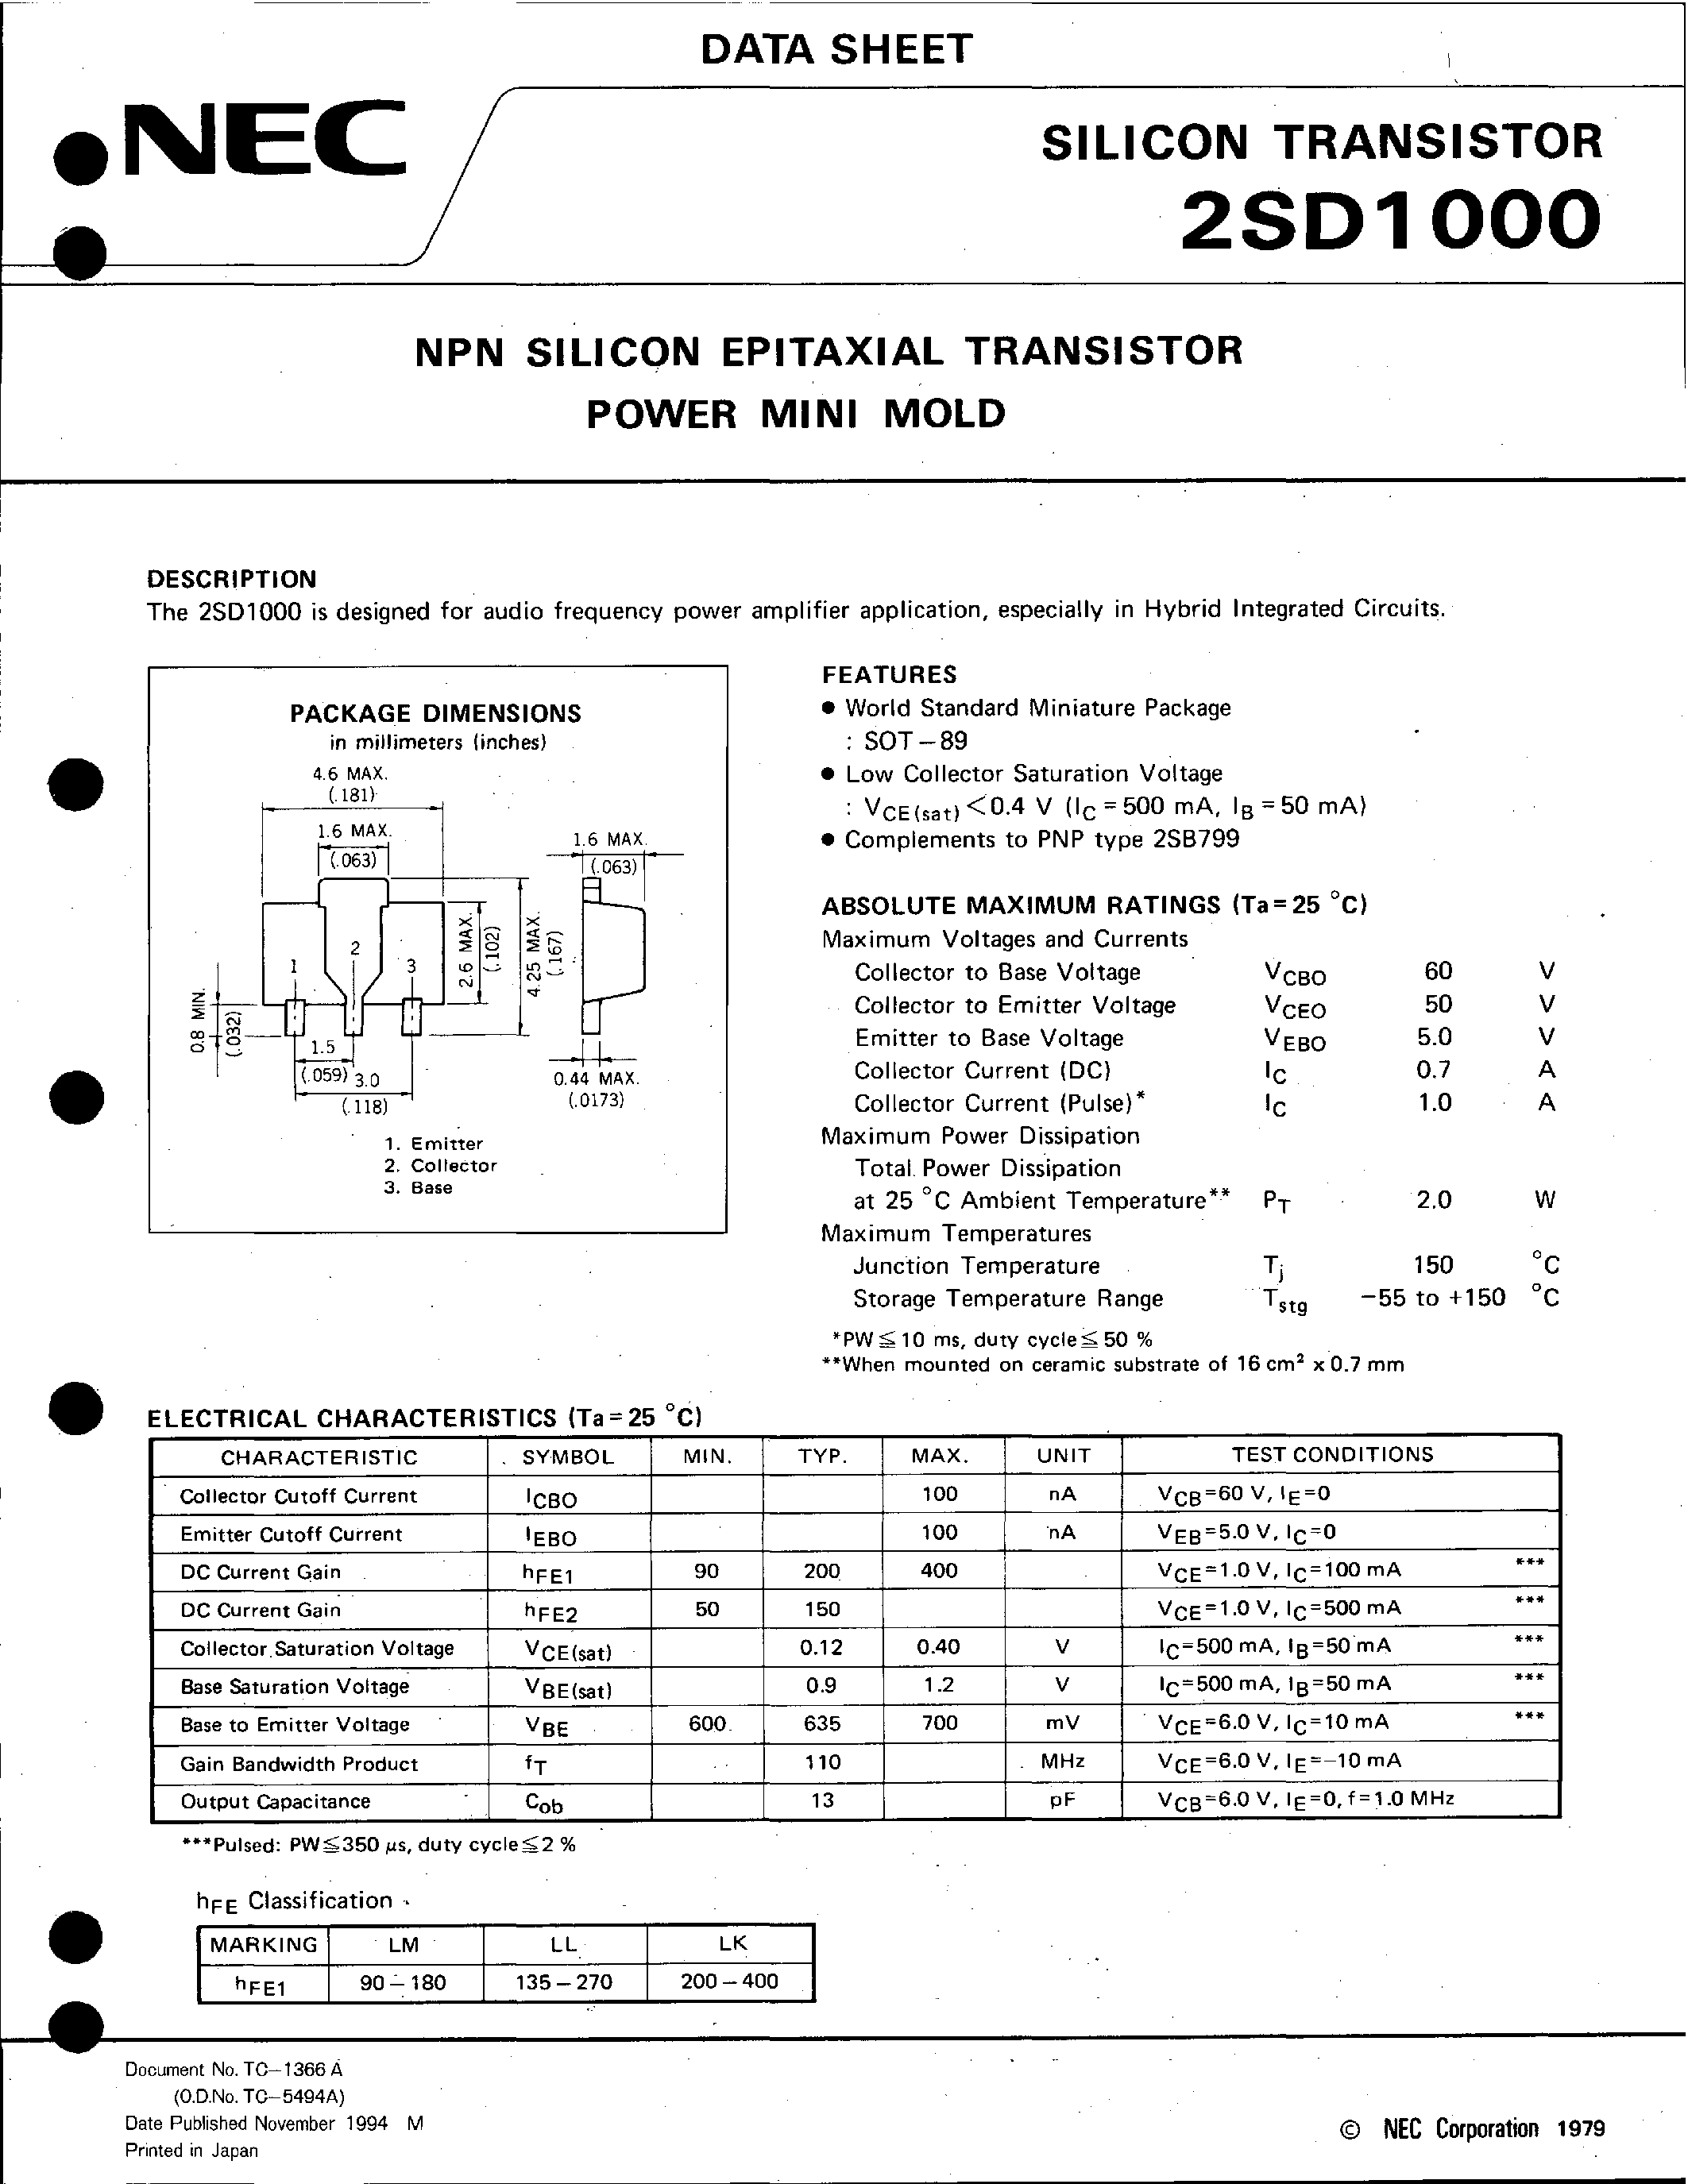 Datasheet 2SD1000 - NPN SILICON EPITAXIAL TRANSISTOR POWER MINI MOLD page 1